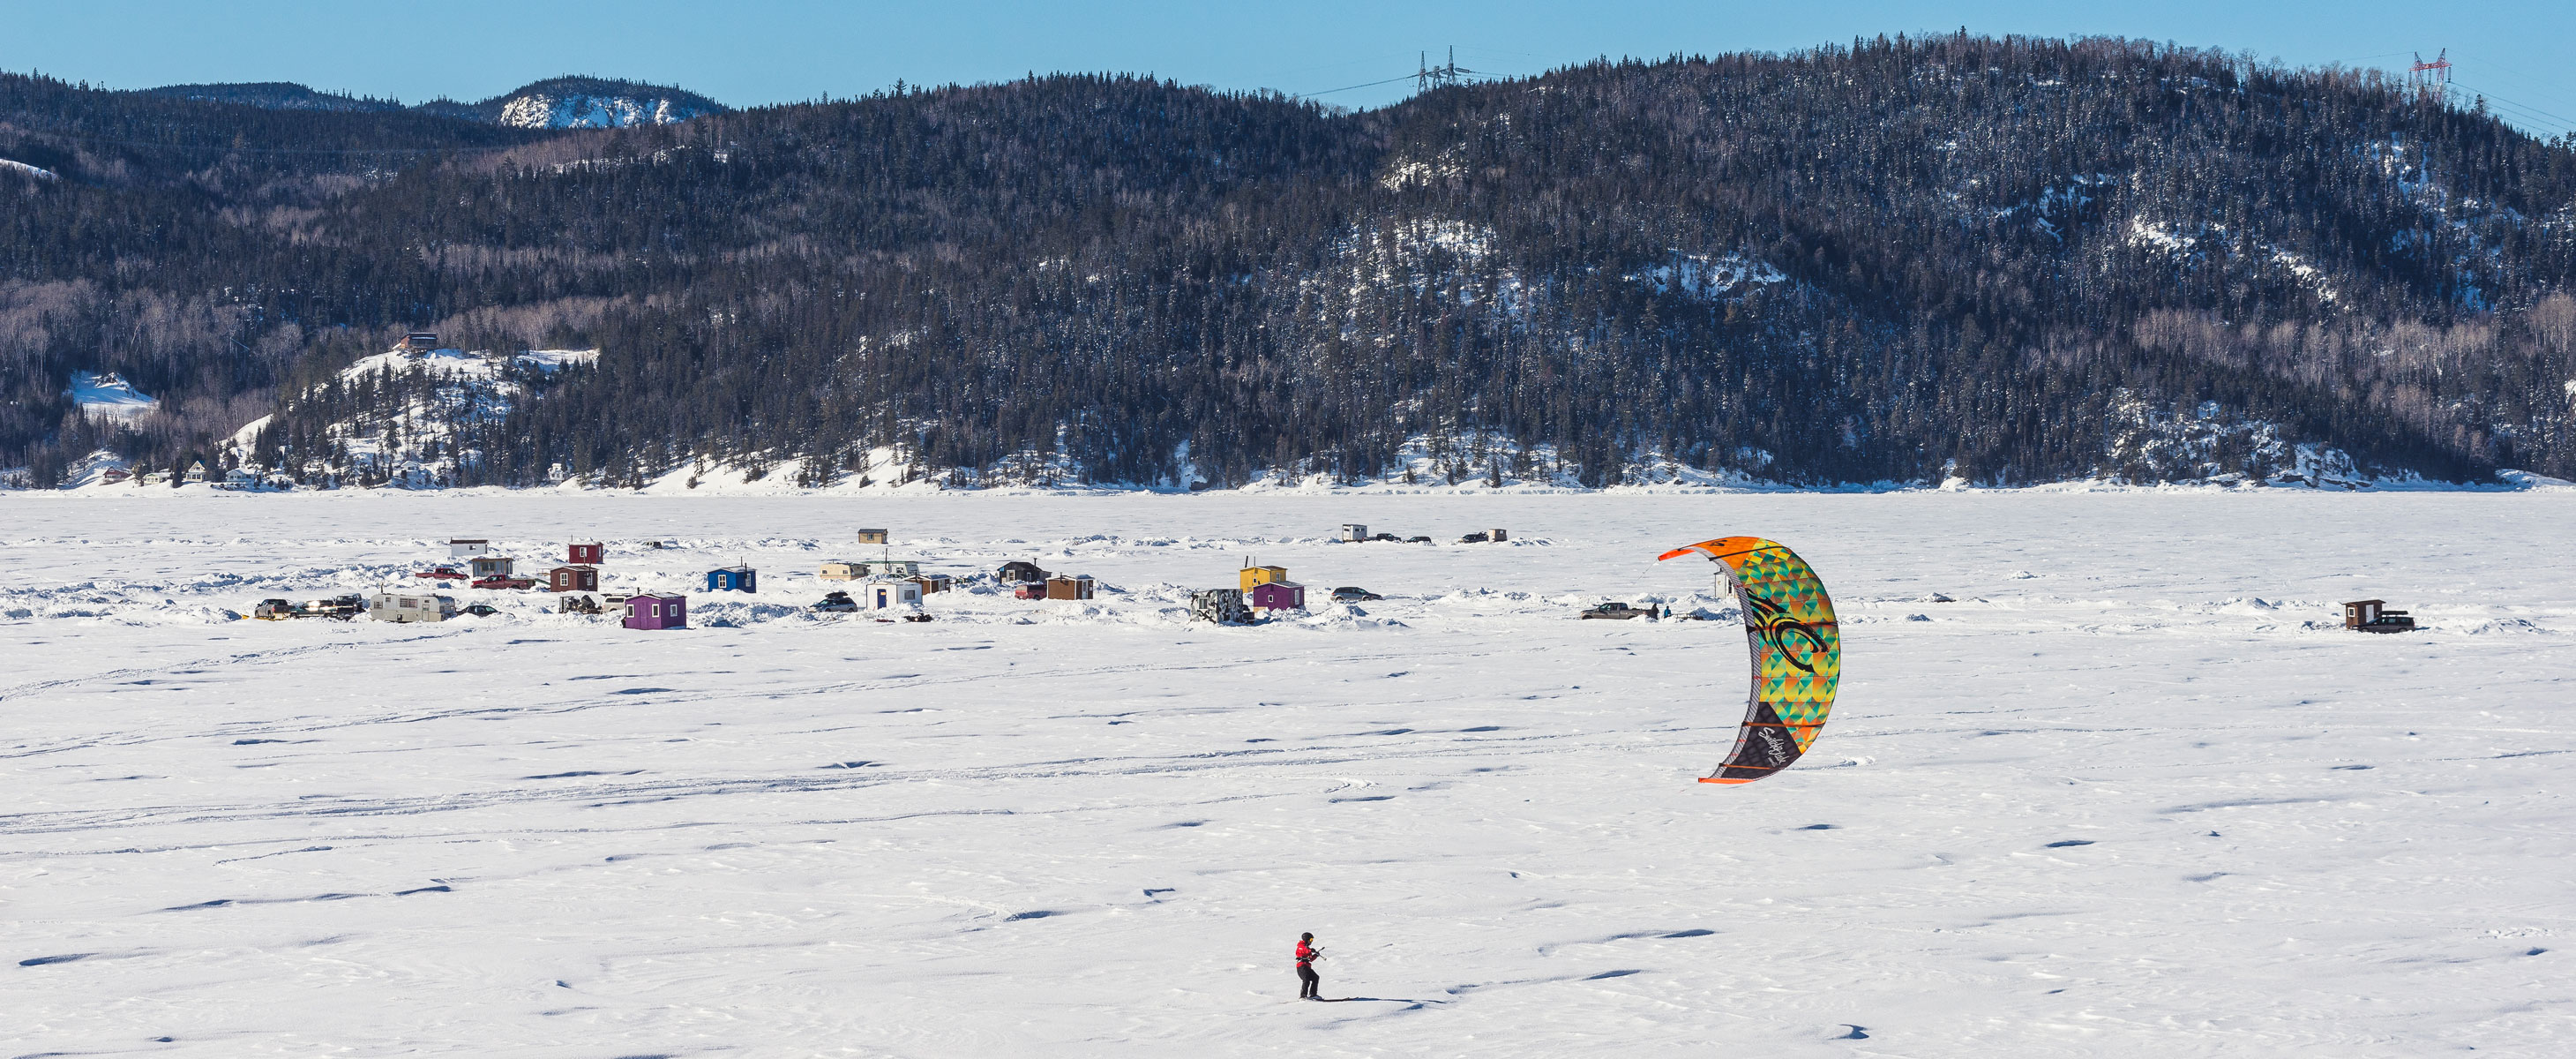 Winter activities in Saguenay-Lac-Saint-Jean